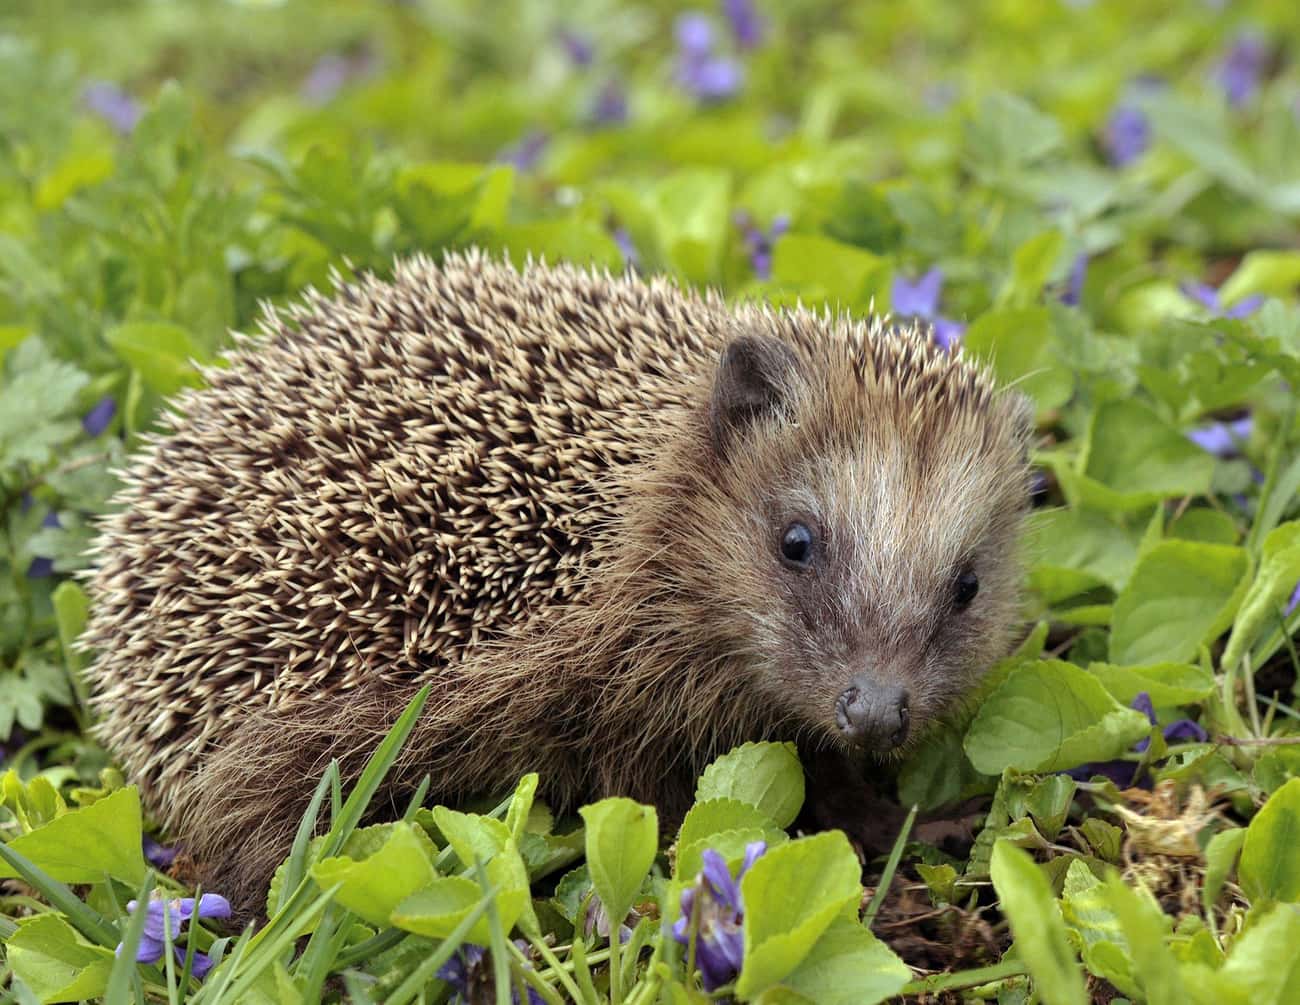 Hedgehogs Have Around 5,000 Spines